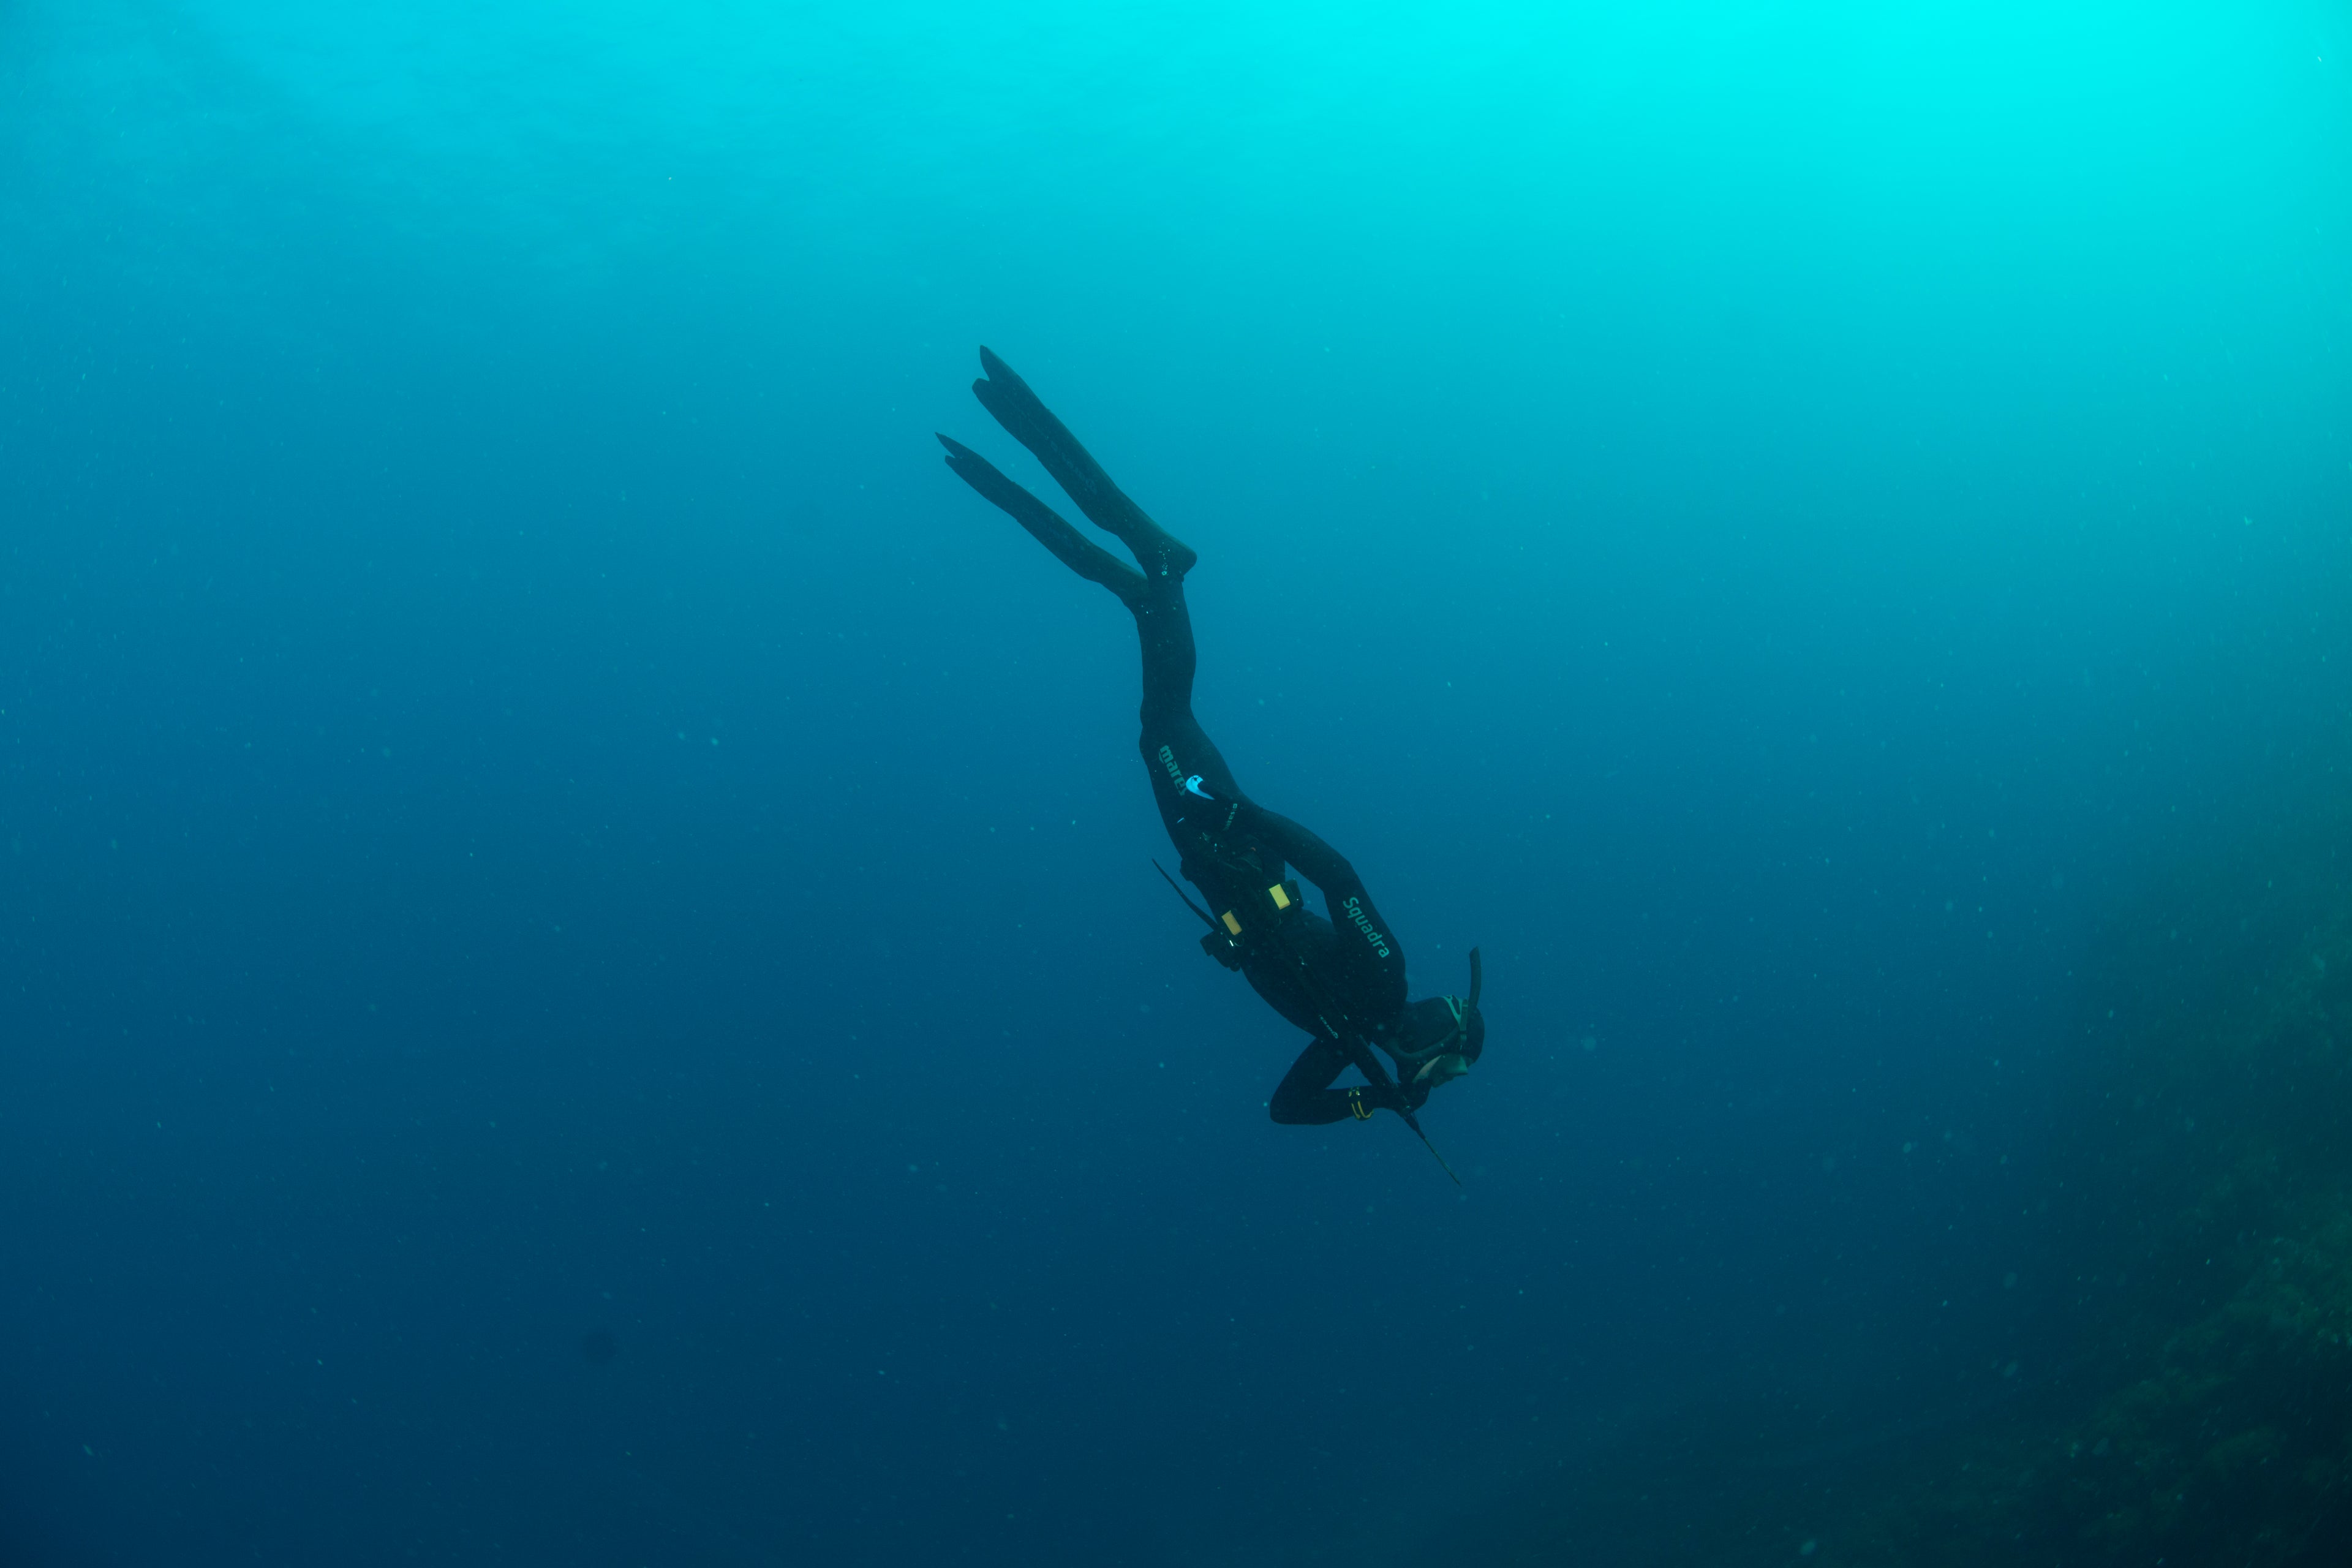 diver holding breath during freedive descent